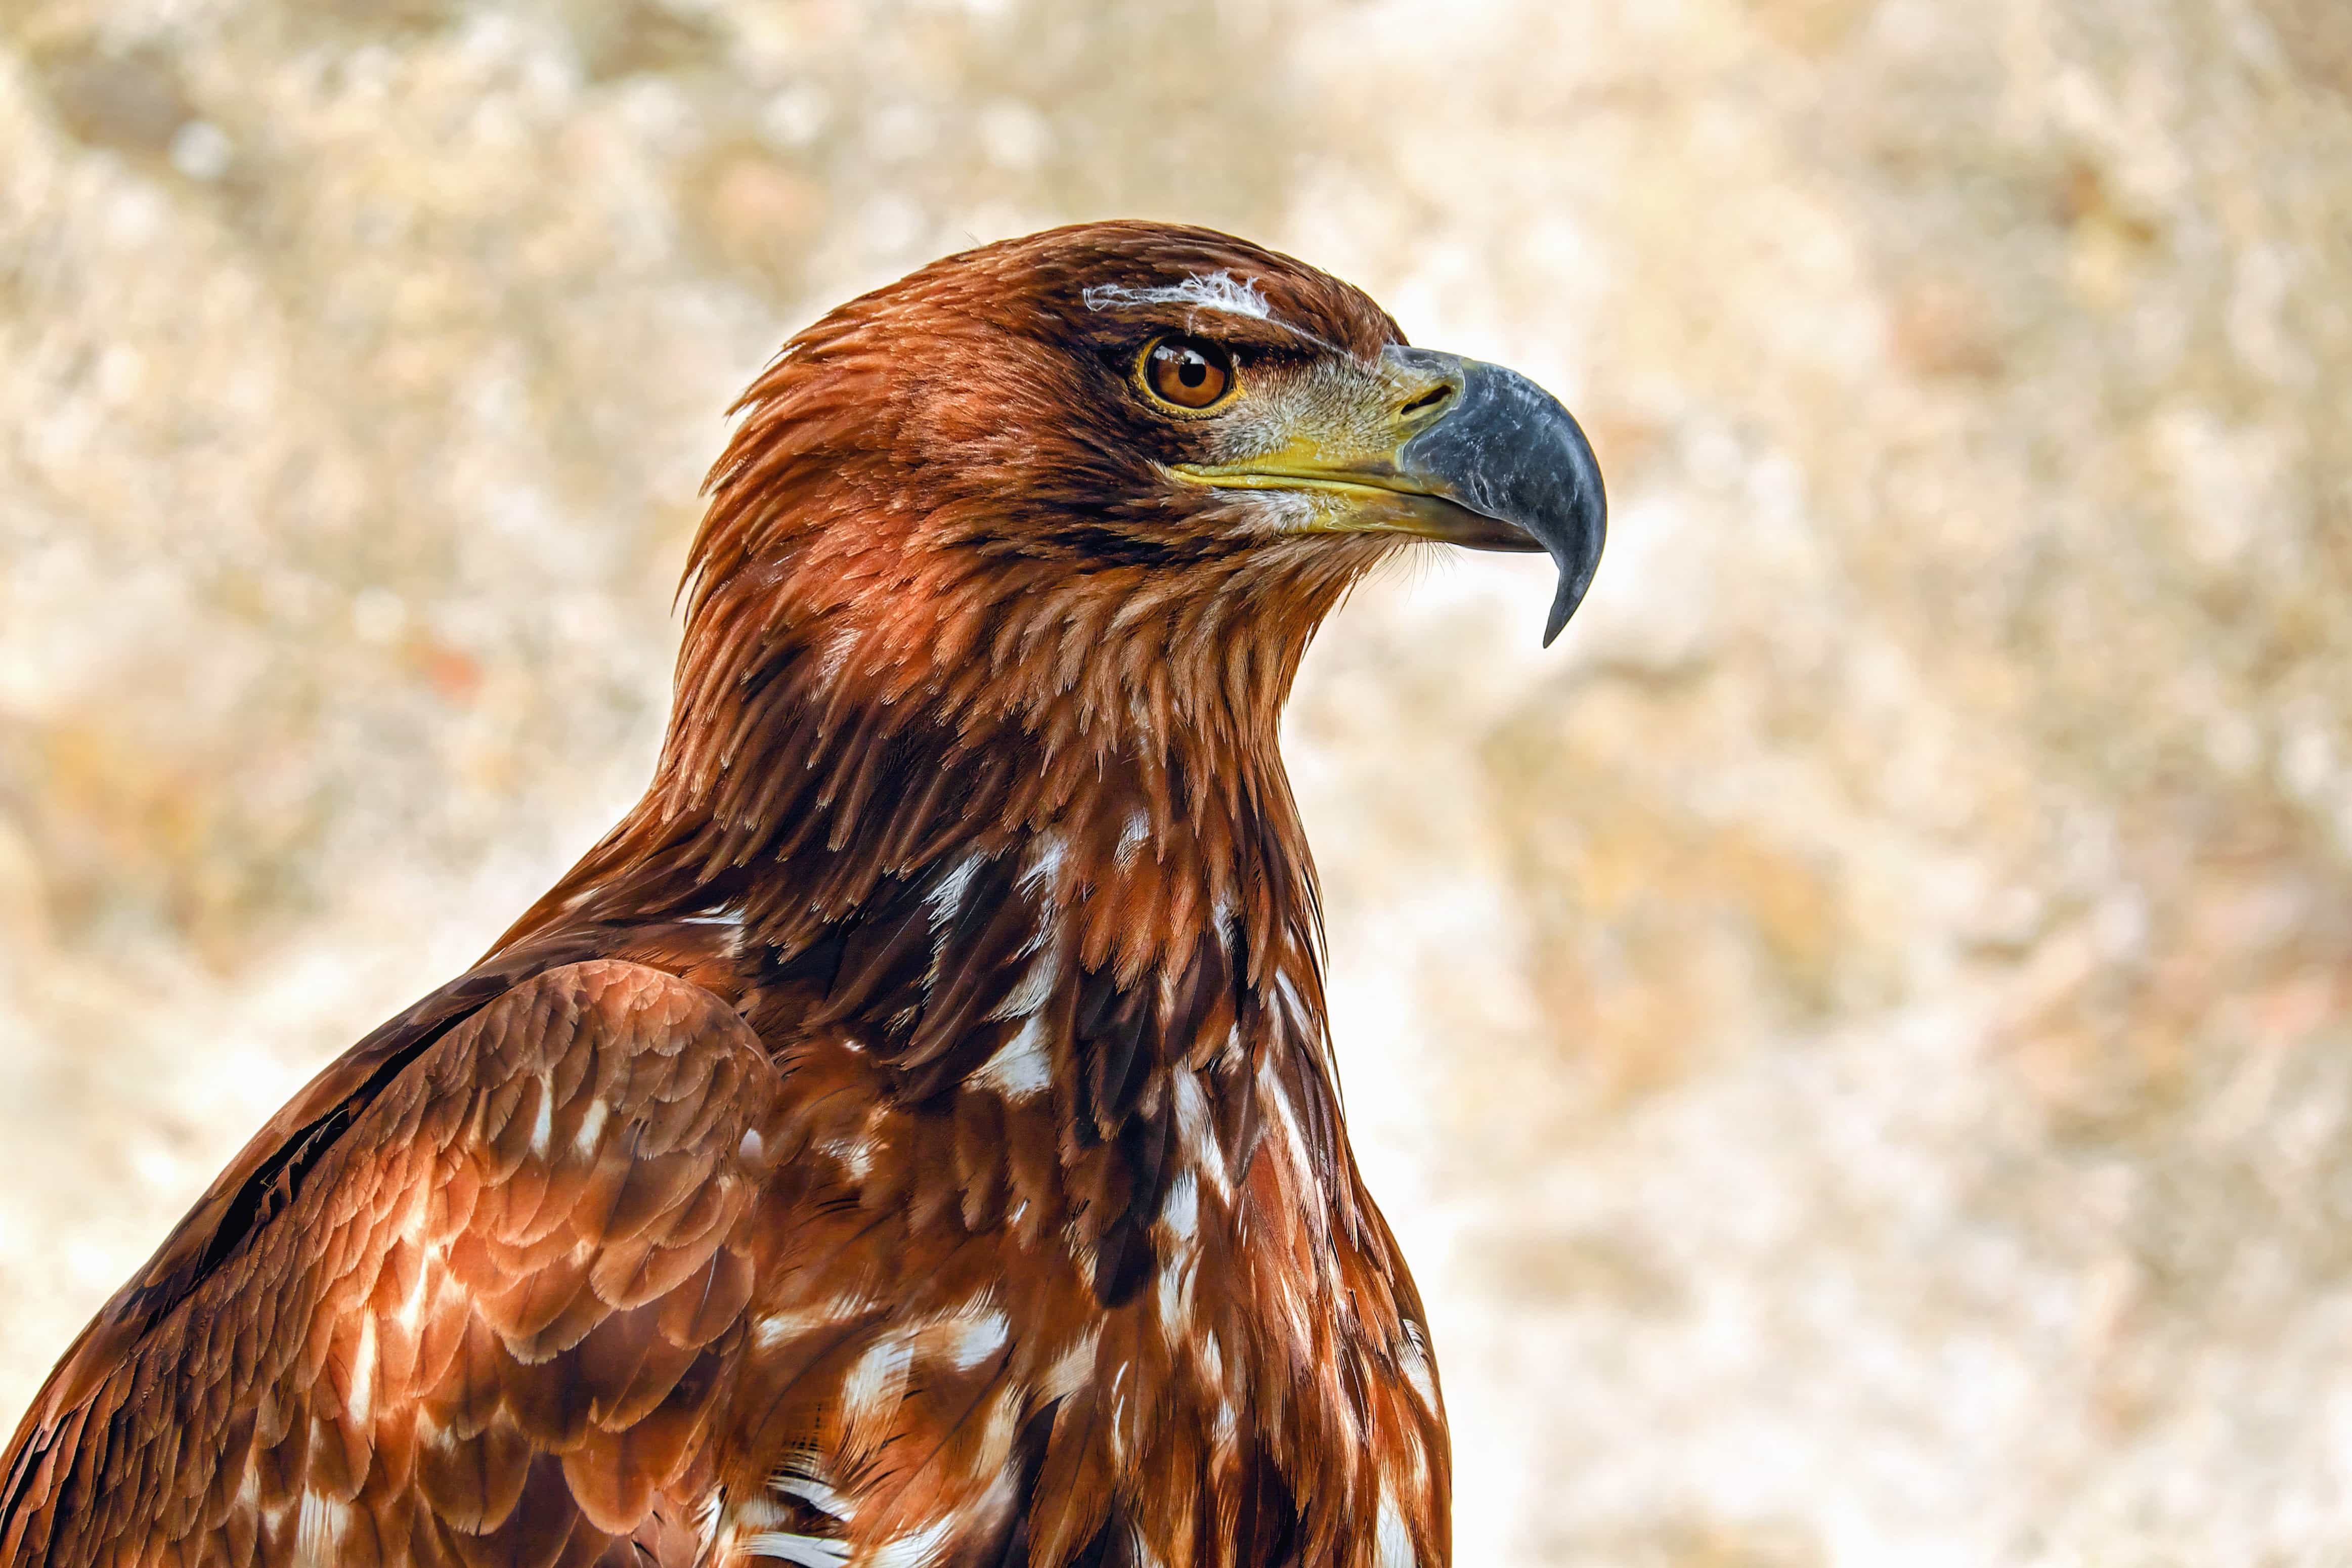 Hawks falcons free images, public domain images